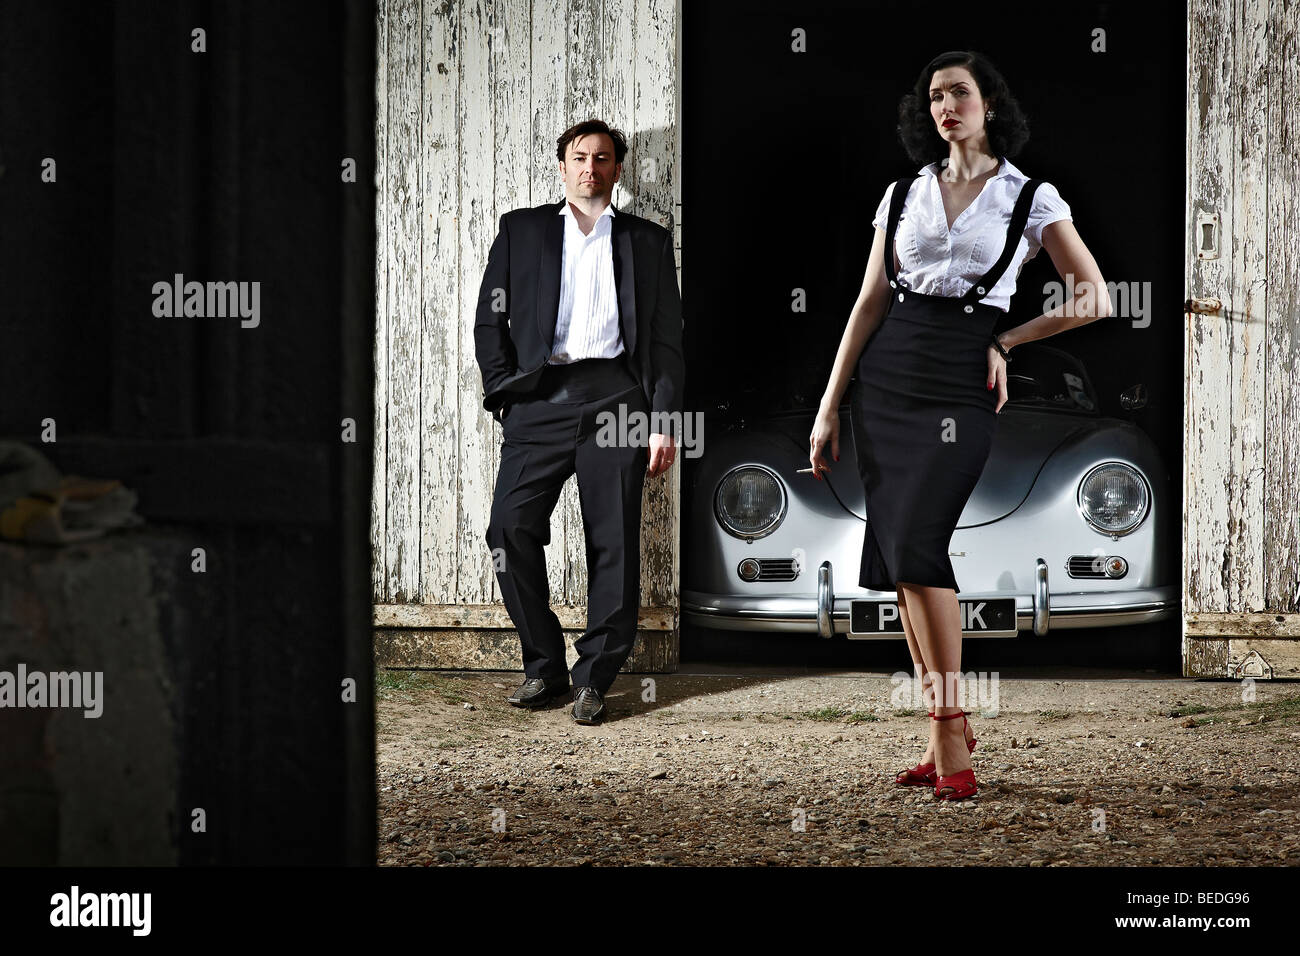 El Chef Mark Baumann posa junto al modelo Fleur y un Porsche Classic Foto de stock